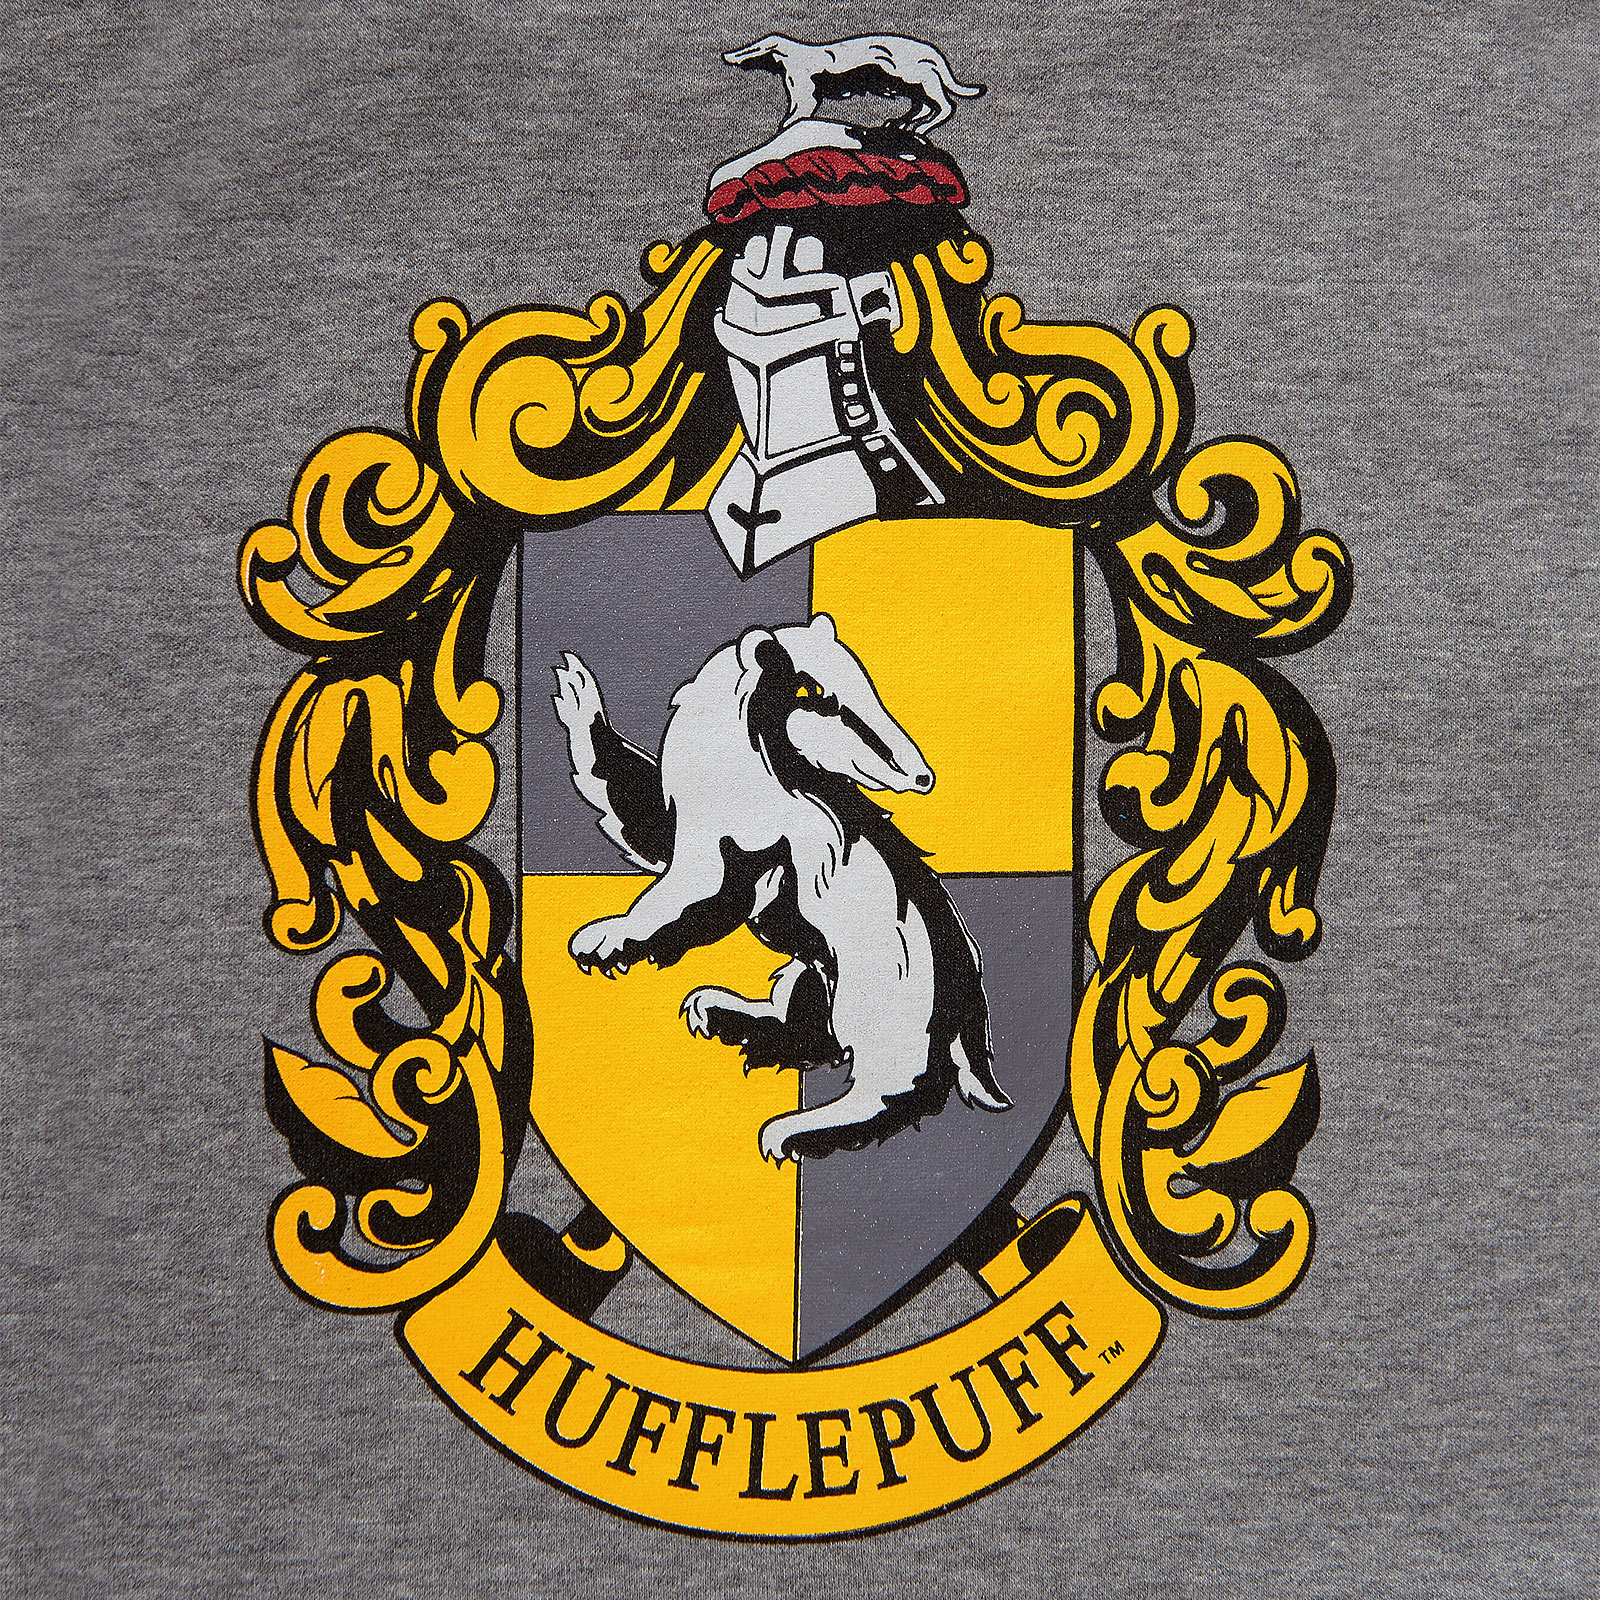 Harry Potter - Hufflepuff Crest College Jacket Women's grey